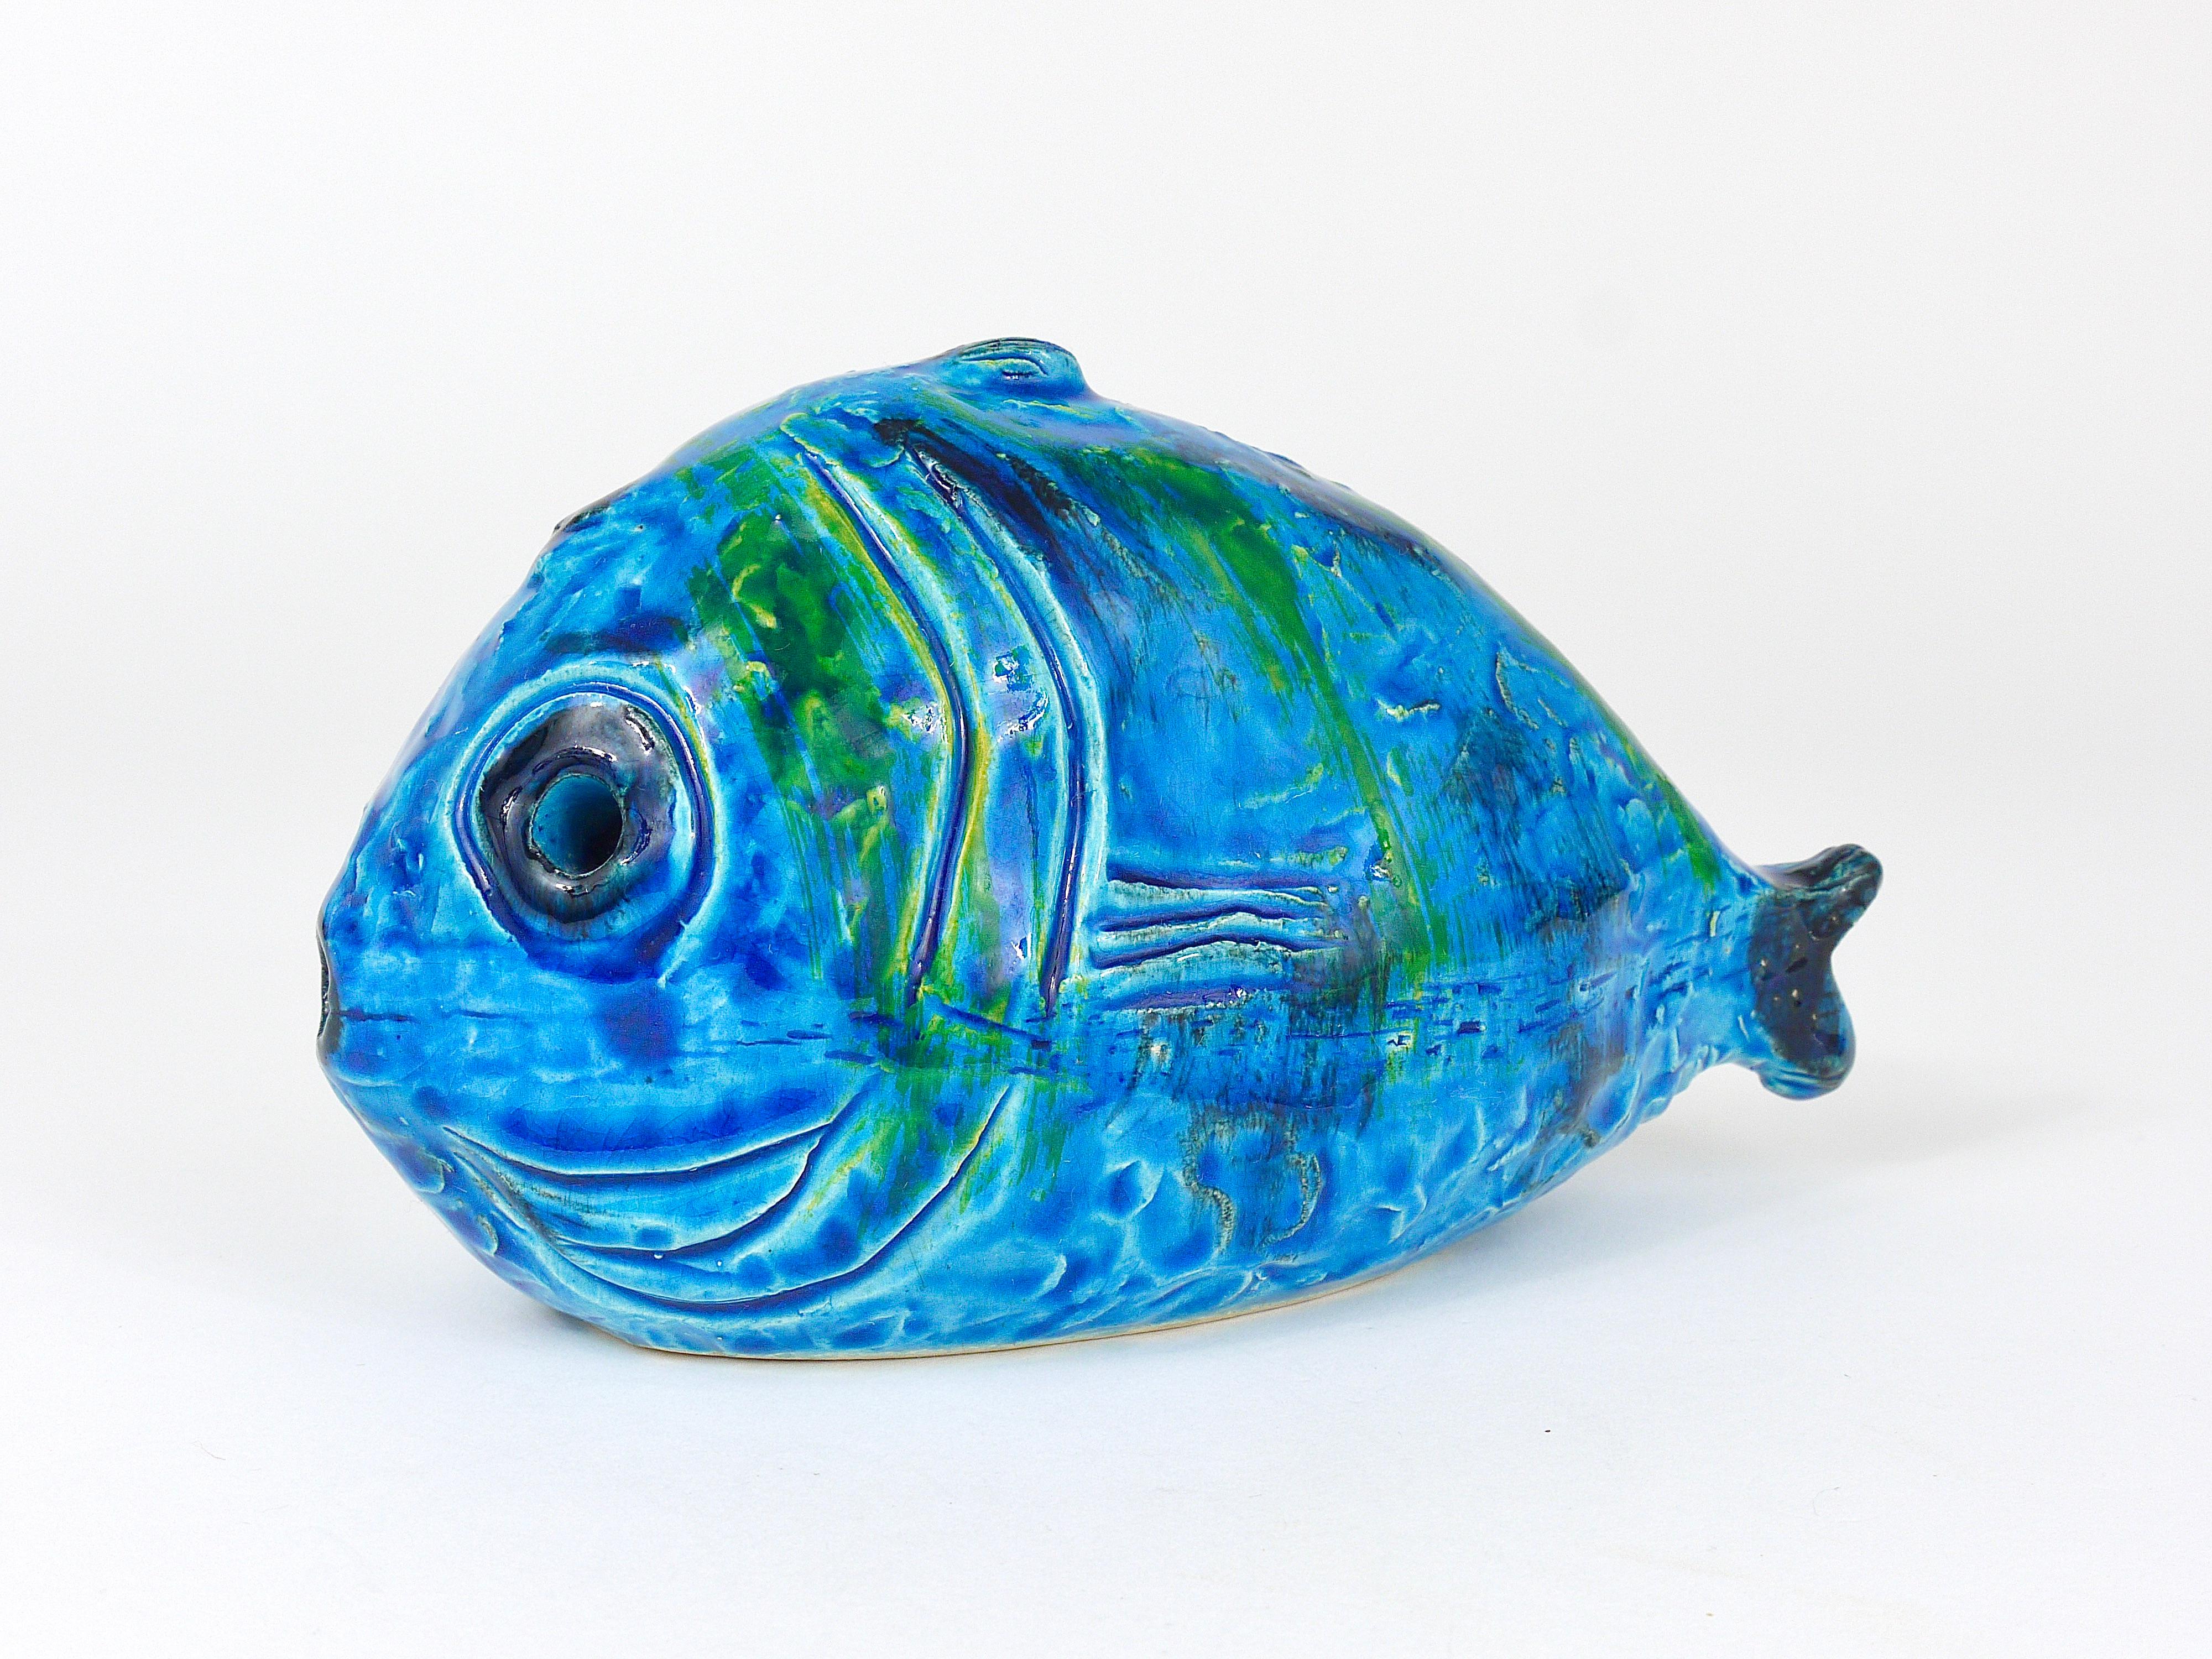 20th Century Aldo Londi Bitossi Rimini Blue Glazed Fish Sculpture Figurine, Italy, 1950s For Sale